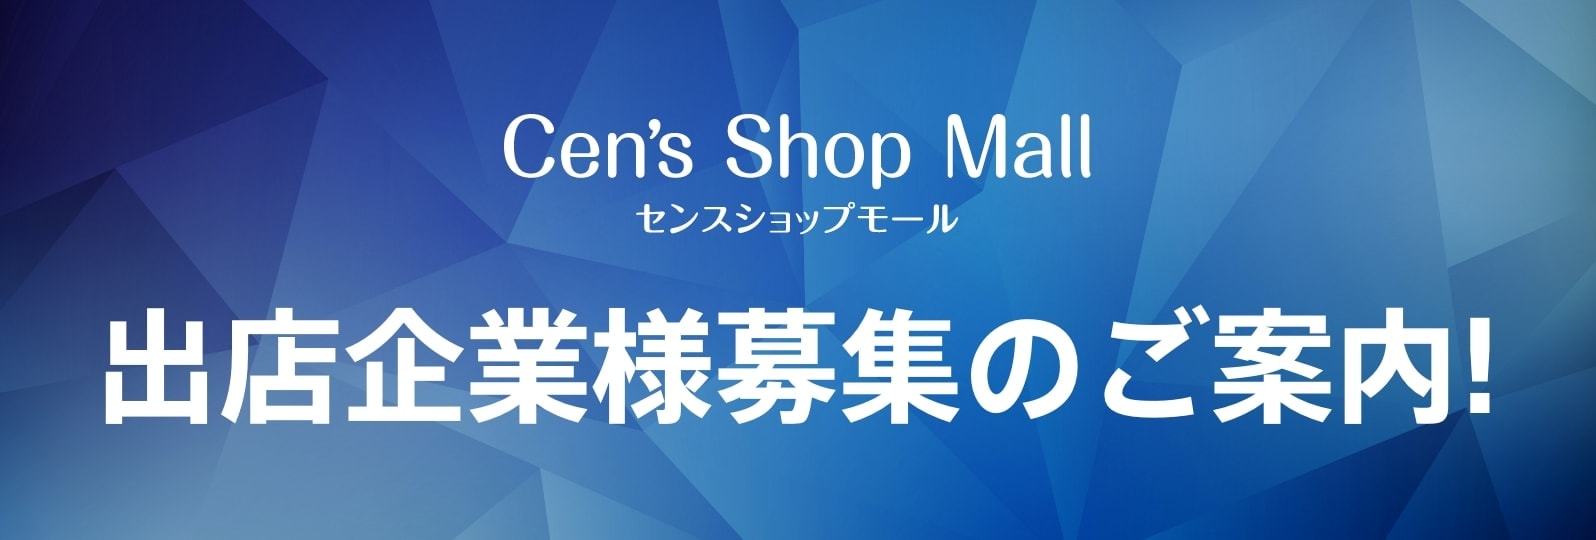 Cen's Shop Mall 出店企業様募集のご案内!